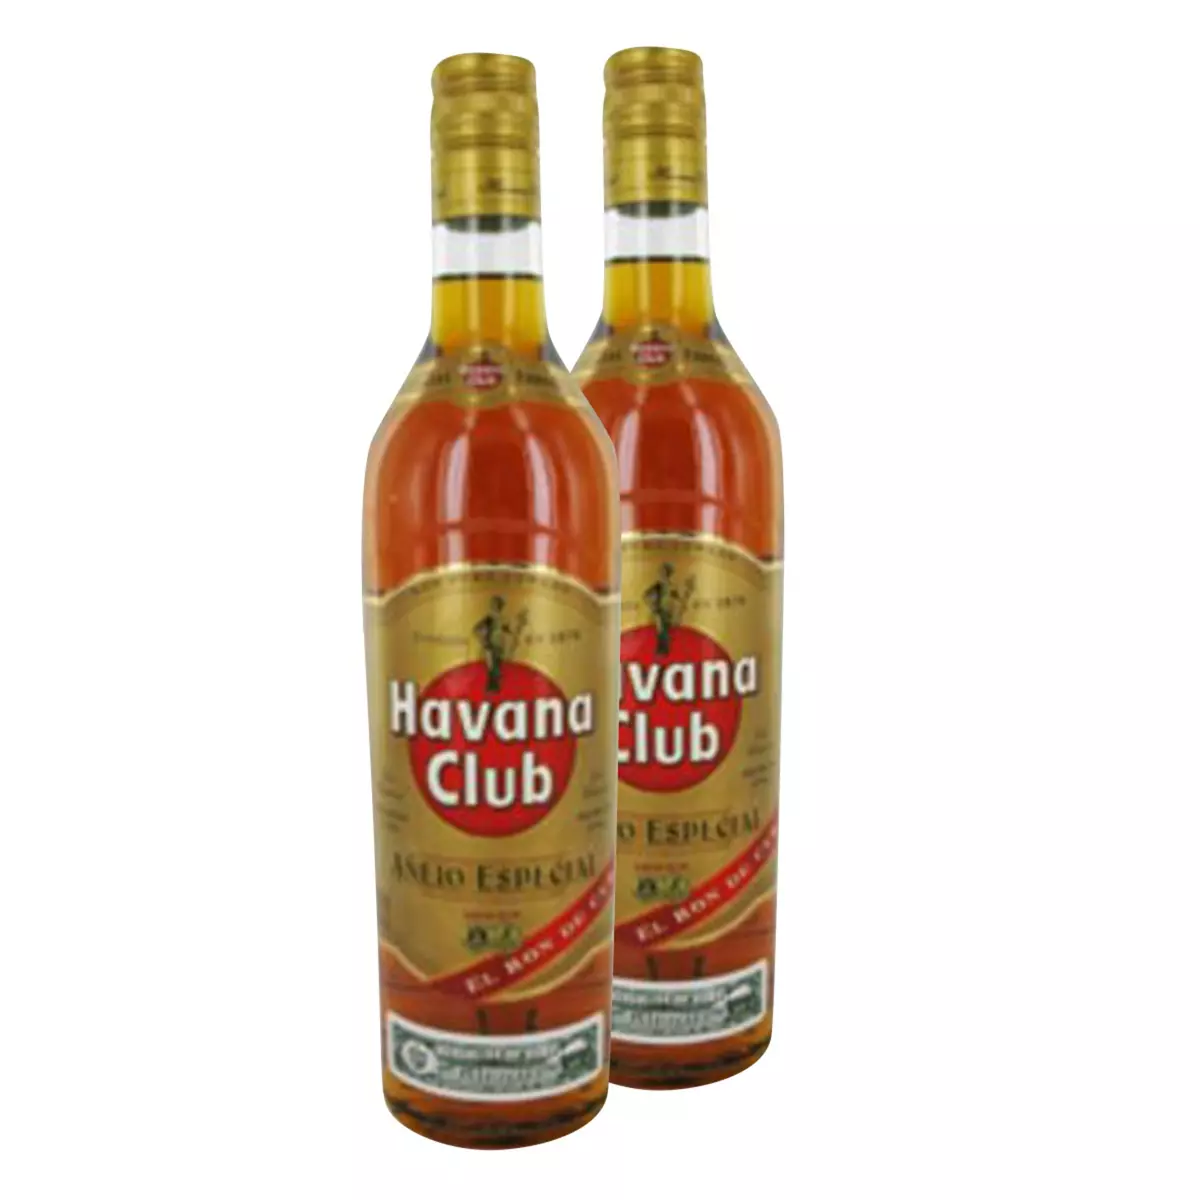 Havana Club Havana Club Anejo Especial Rhum Ambré 40%